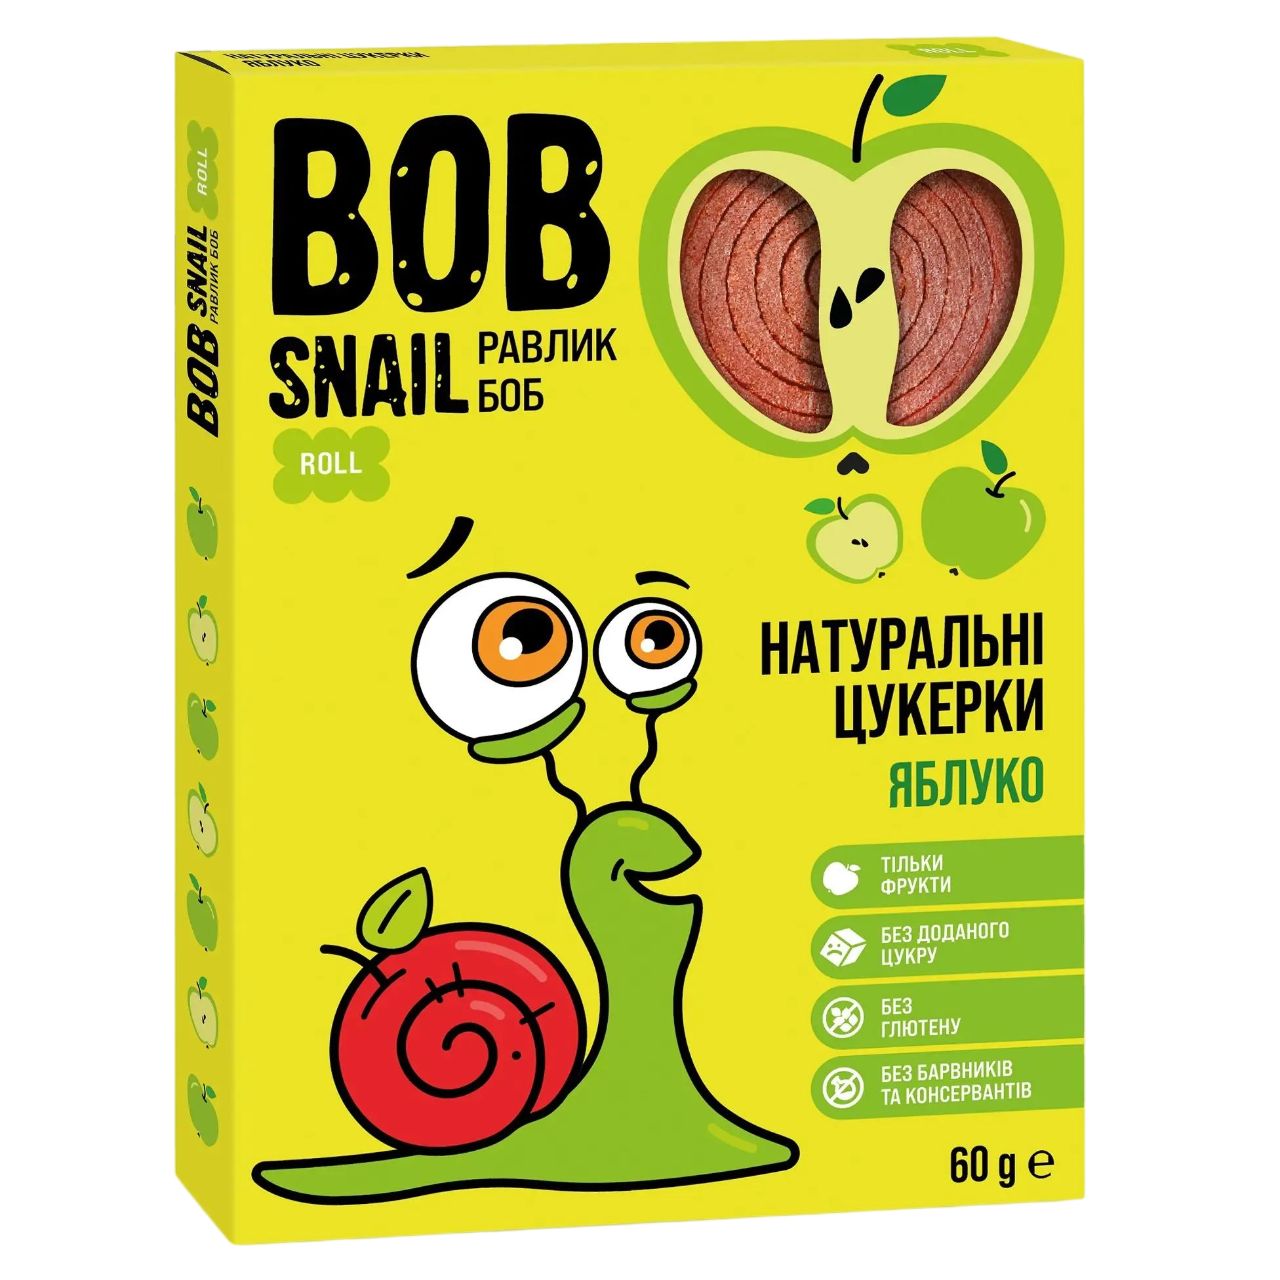 Натуральні цукерки Bob Snail Равлик Боб Яблуко 720 г (12 шт. по 60 г) - фото 2